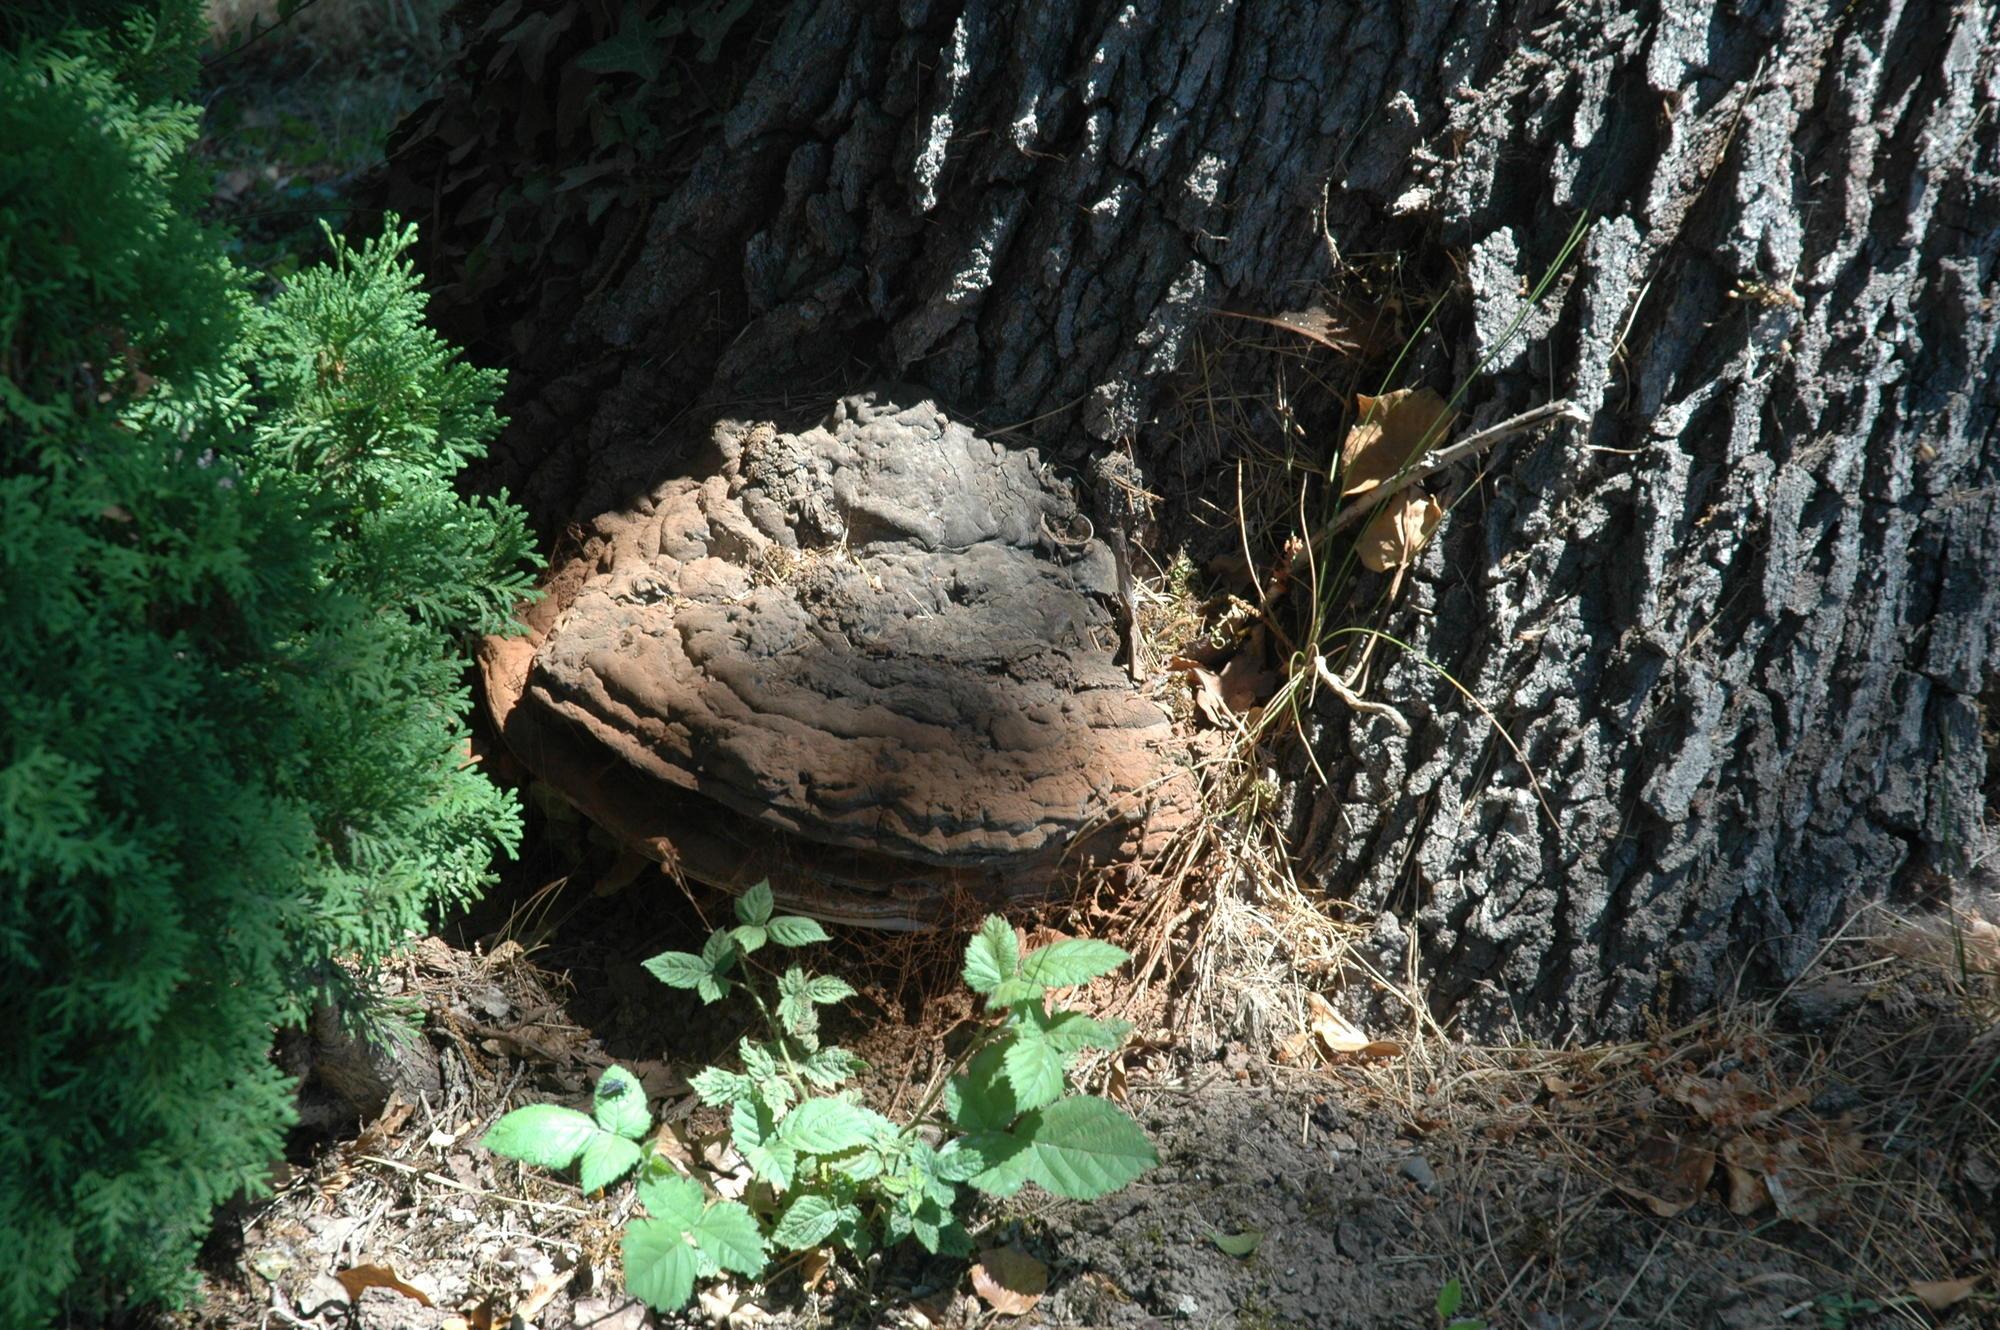 conk at base of oak tree